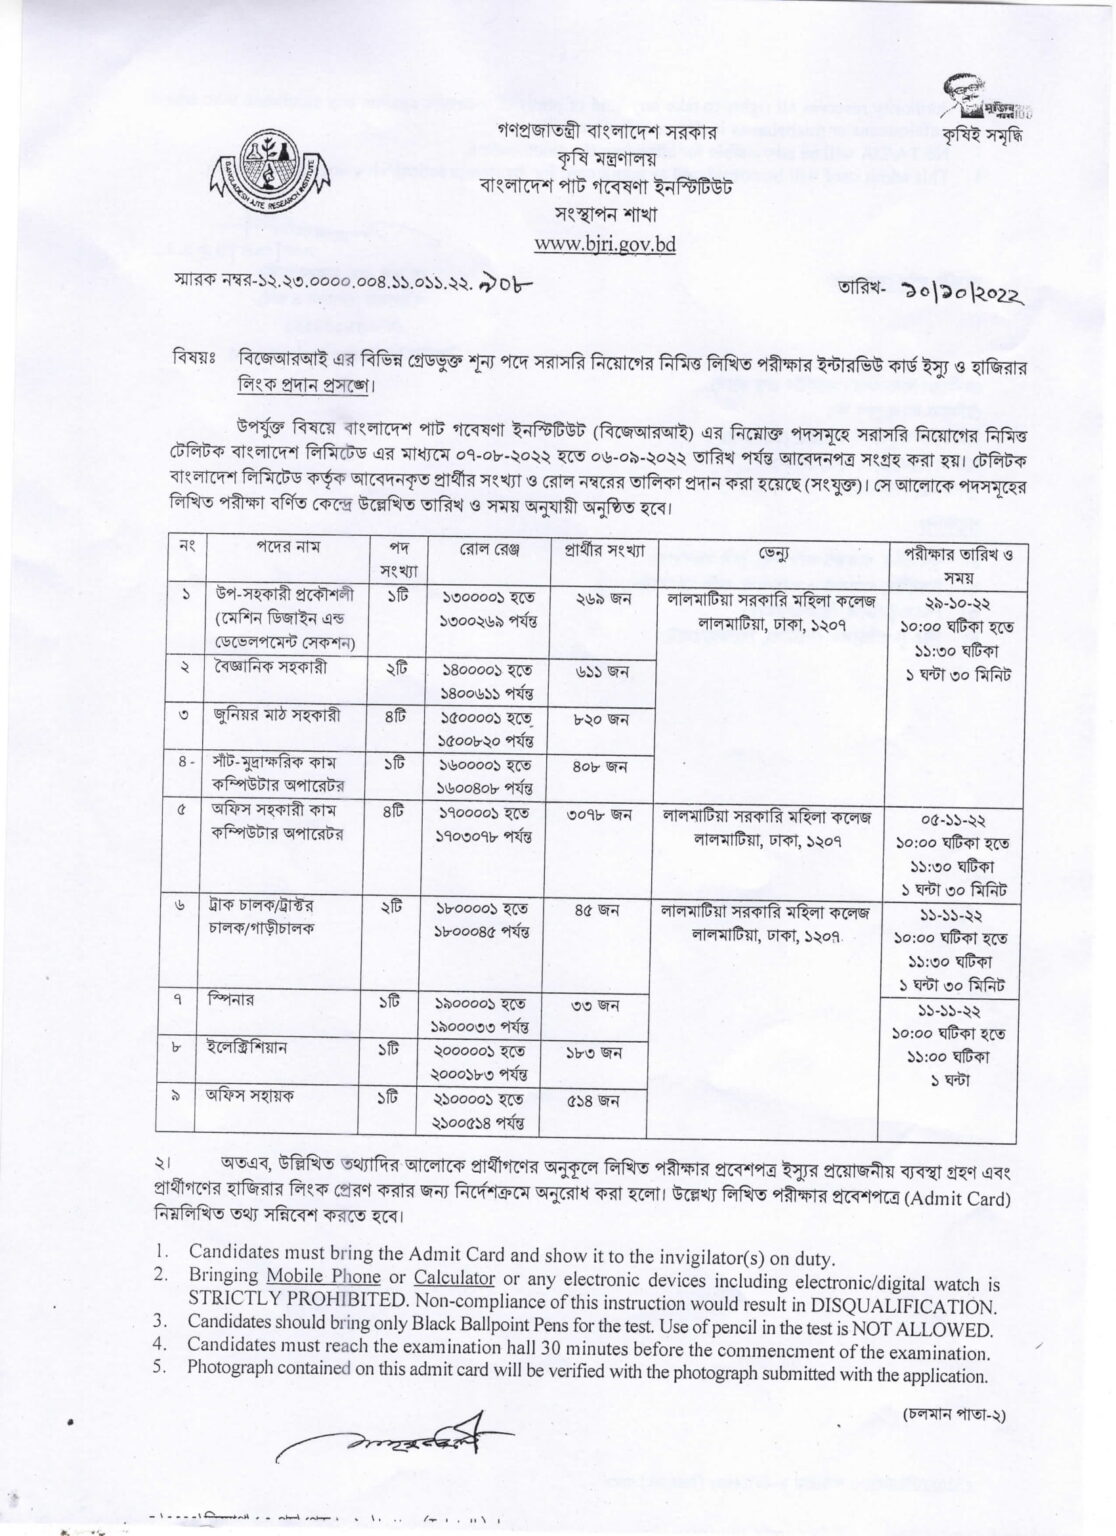 Bangladesh-Jute-Research-Institute-BJRI-Exam-Seat-Plan-2022-PDF-1-1116x1536